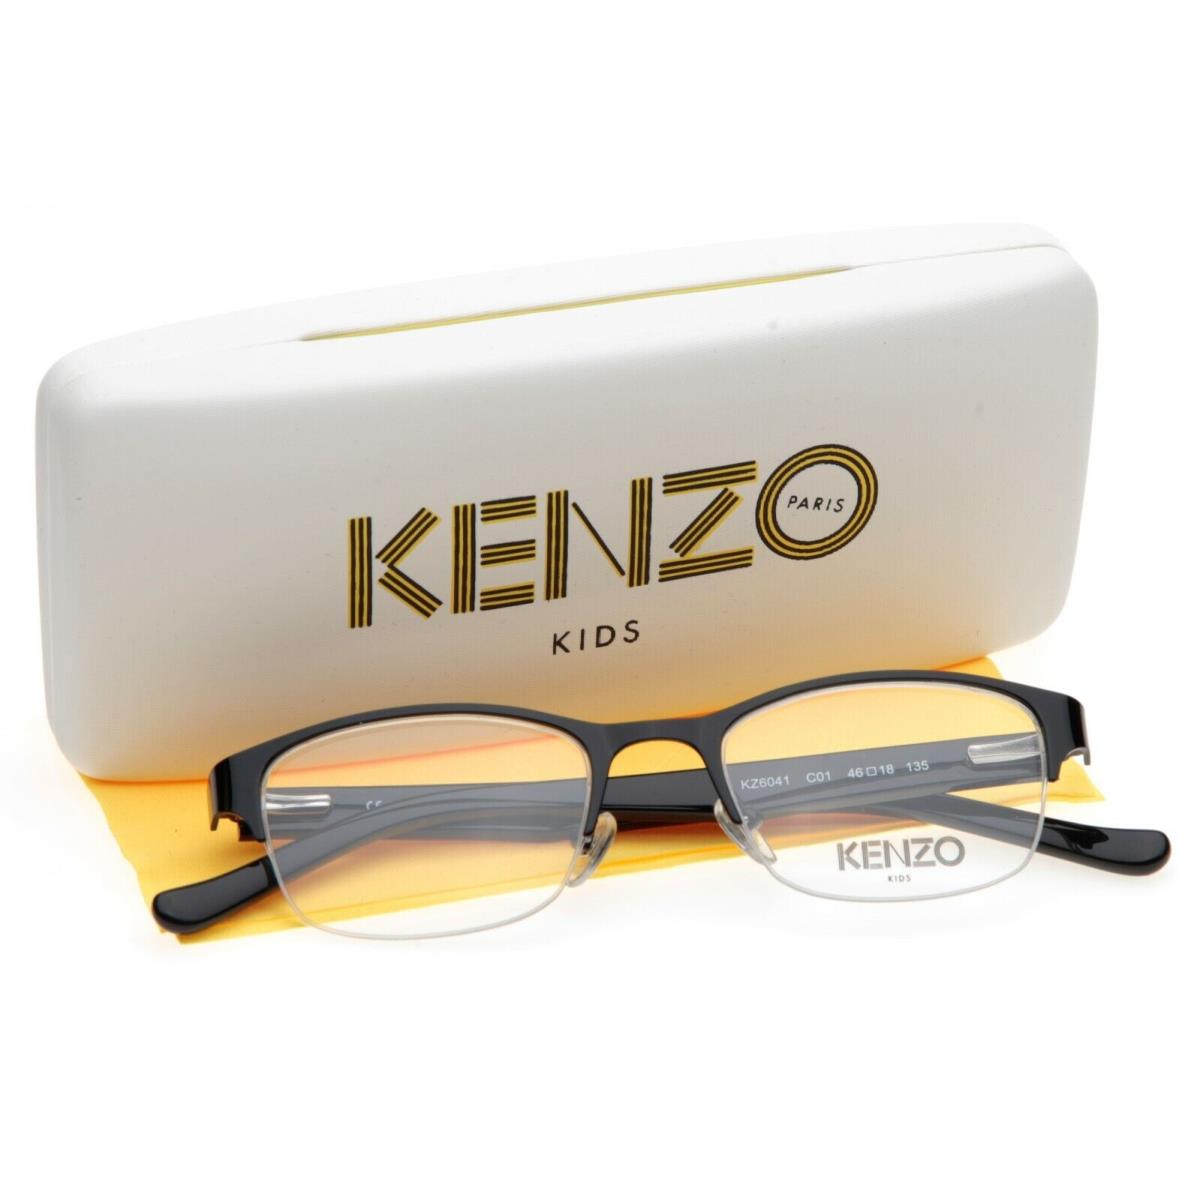 Kenzo Kids KZ6041 C01 Black Eyeglasses Glasses 6041 46-18-135 B33mm France